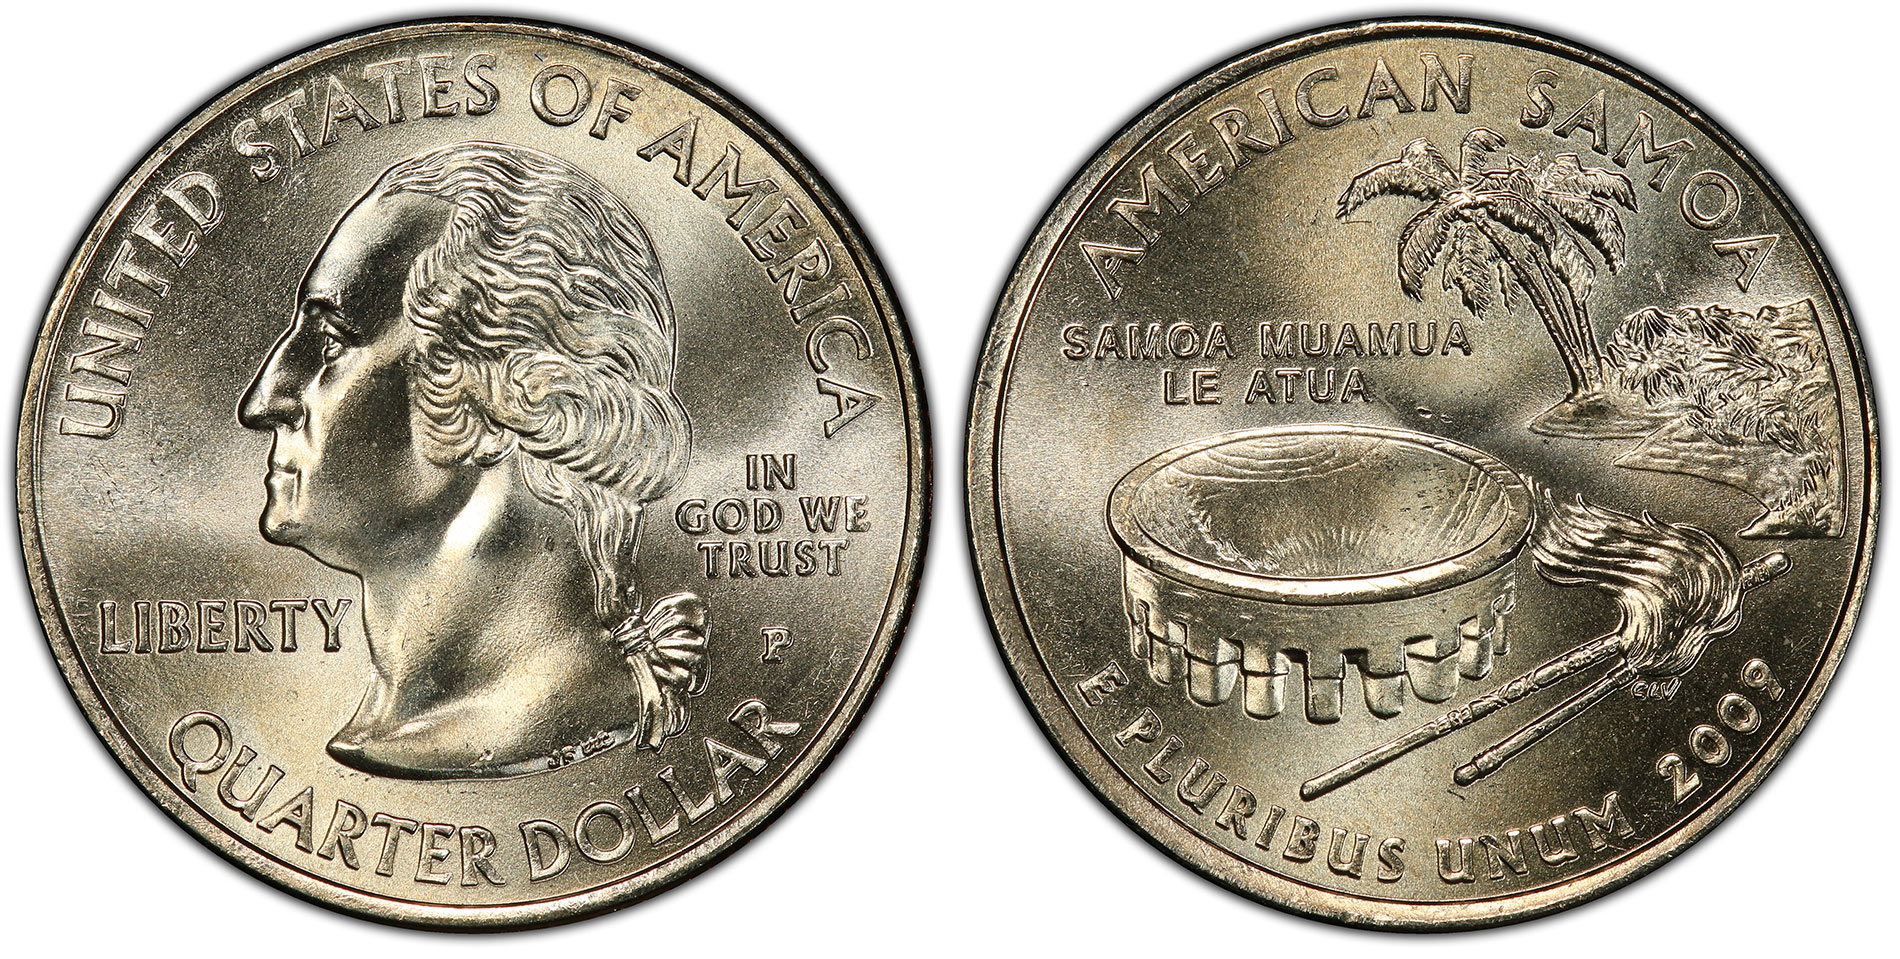 2009 P DC & US Territories Quarter 6 coins US mint rolls Coins Money Territory 